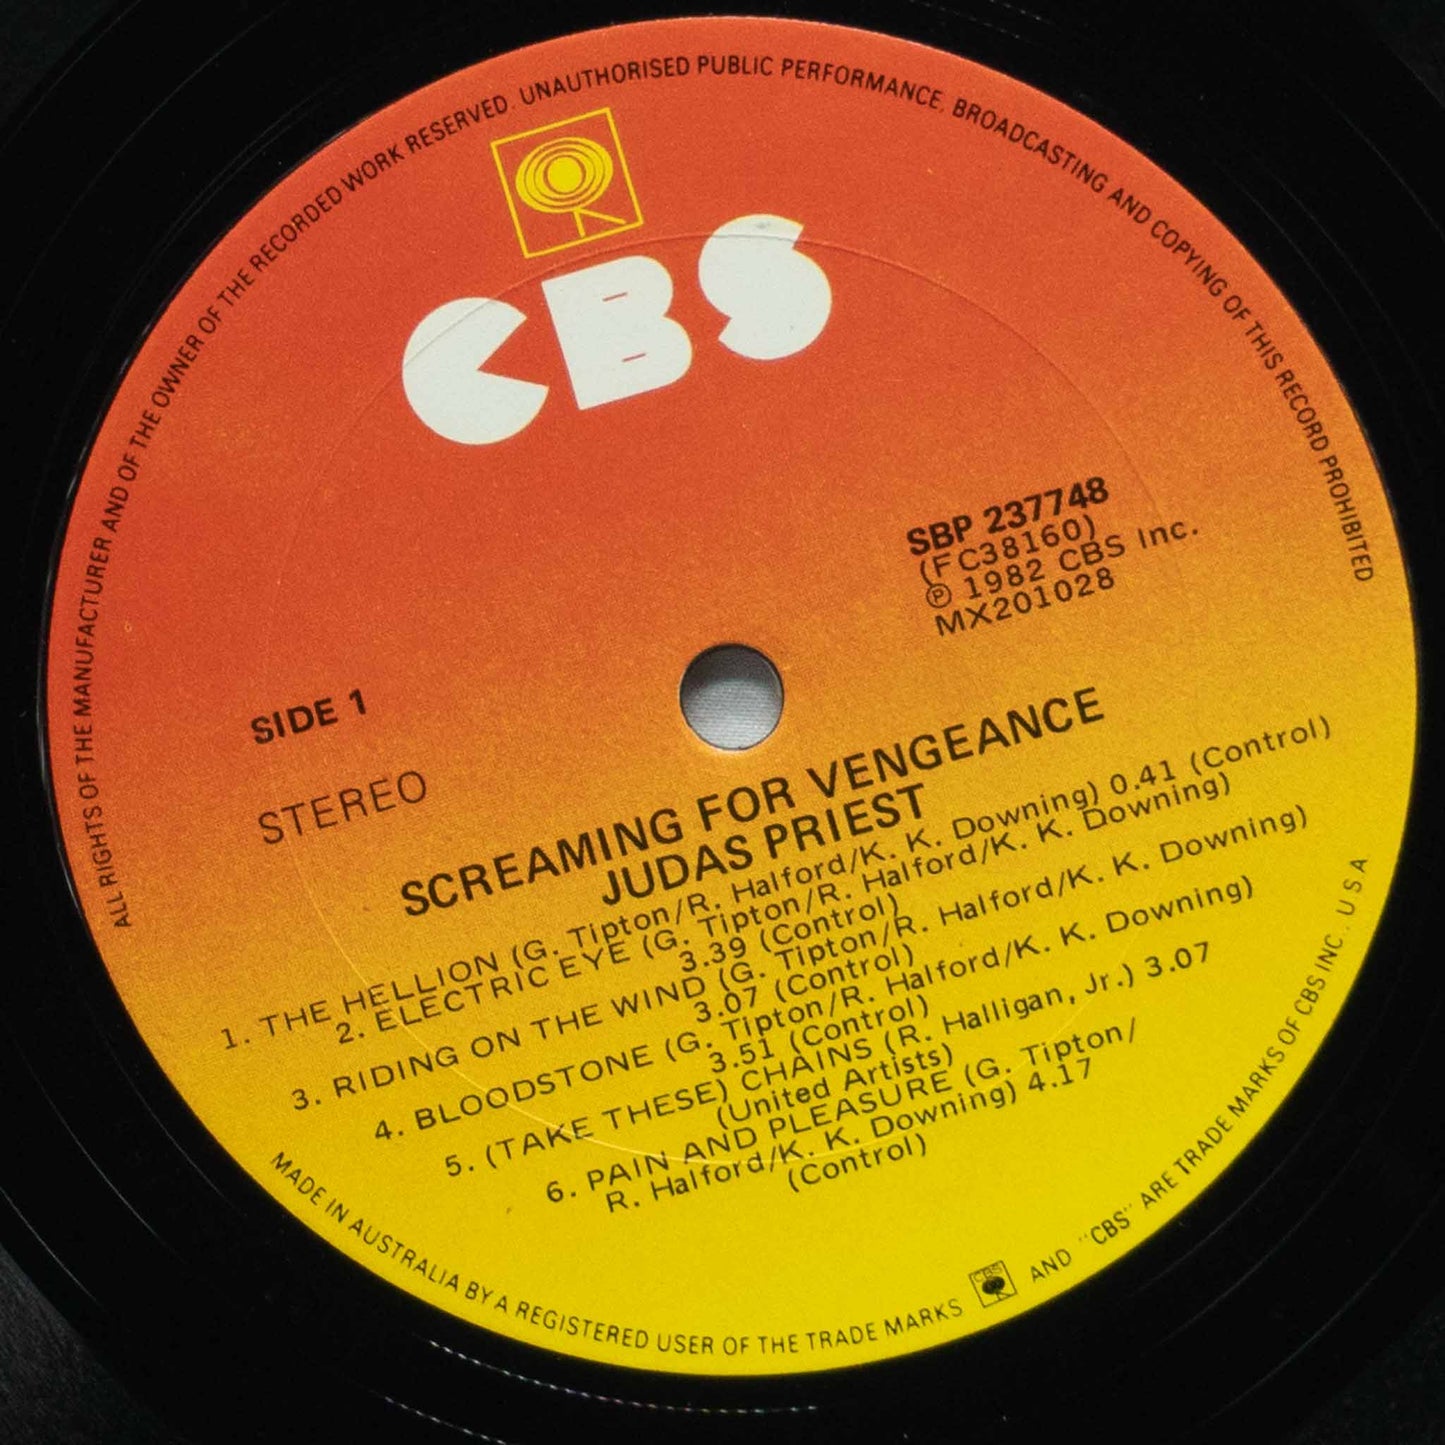 Judas Priest – Screaming For Vengeance